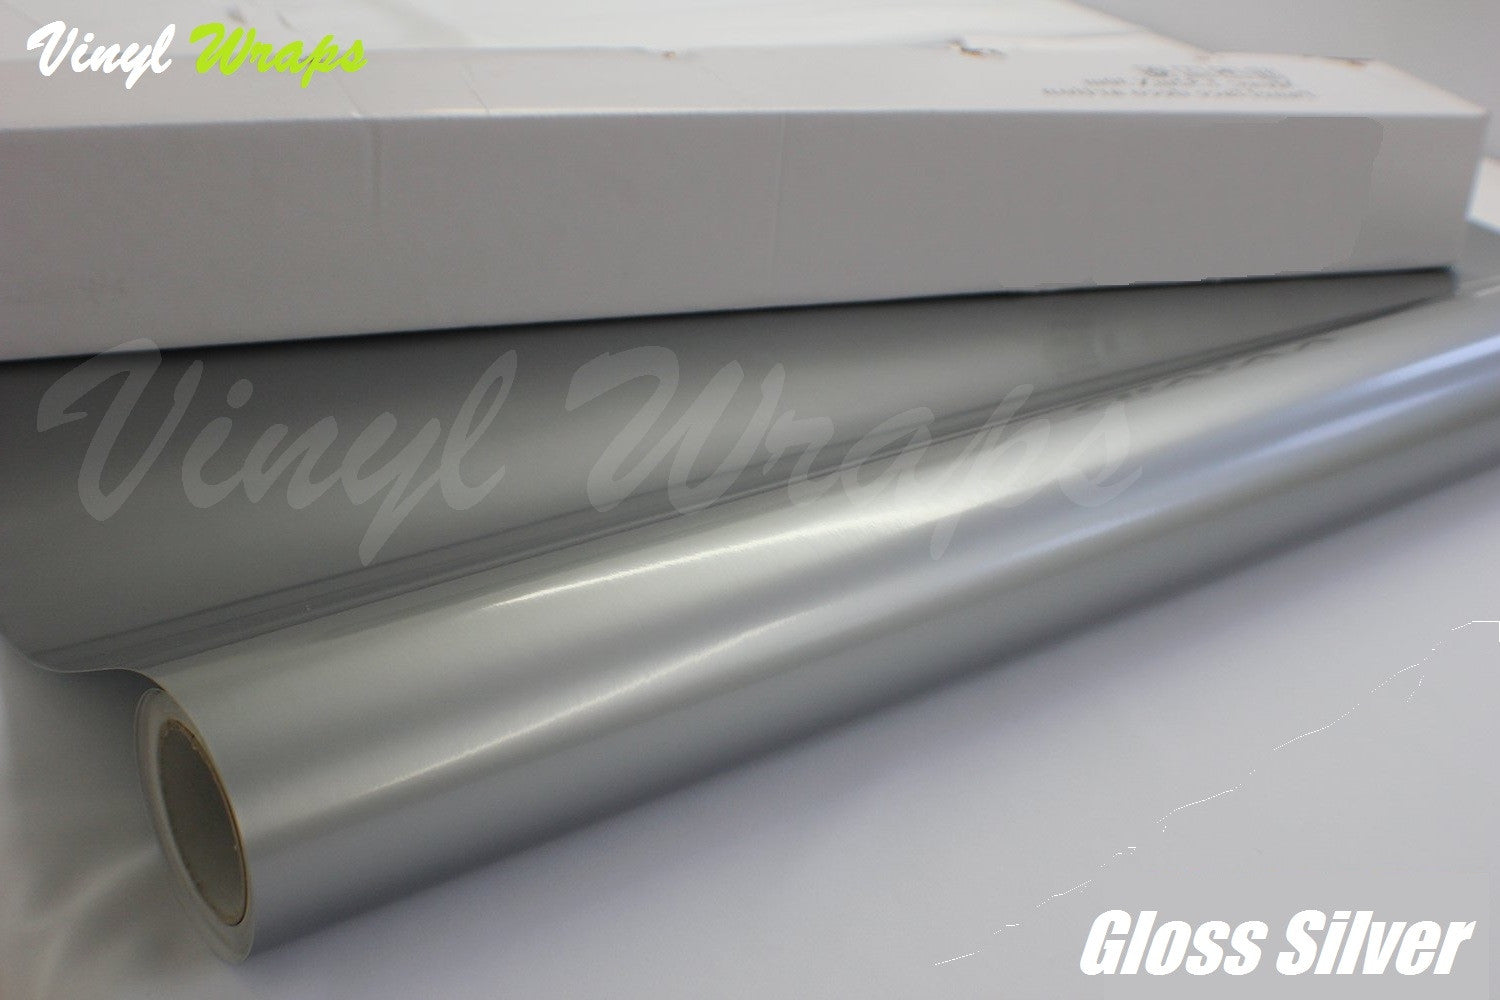 Gloss Silver Vinyl Wrap